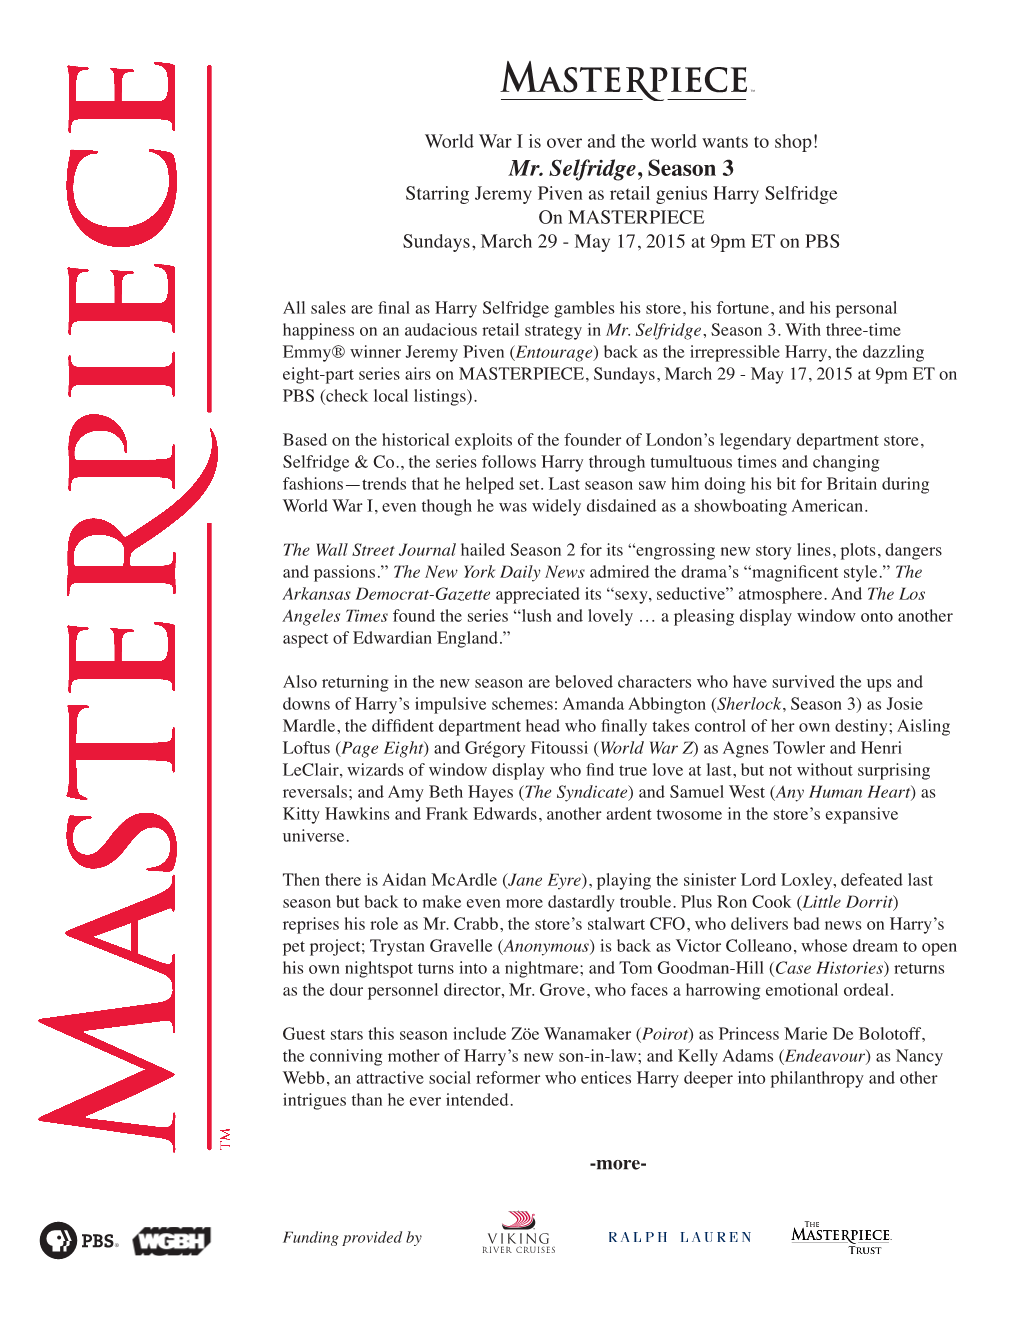 Mr. Selfridge, Season 3 Starring Jeremy Piven As Retail Genius Harry Selfridge on MASTERPIECE Sundays, March 29 - May 17, 2015 at 9Pm ET on PBS